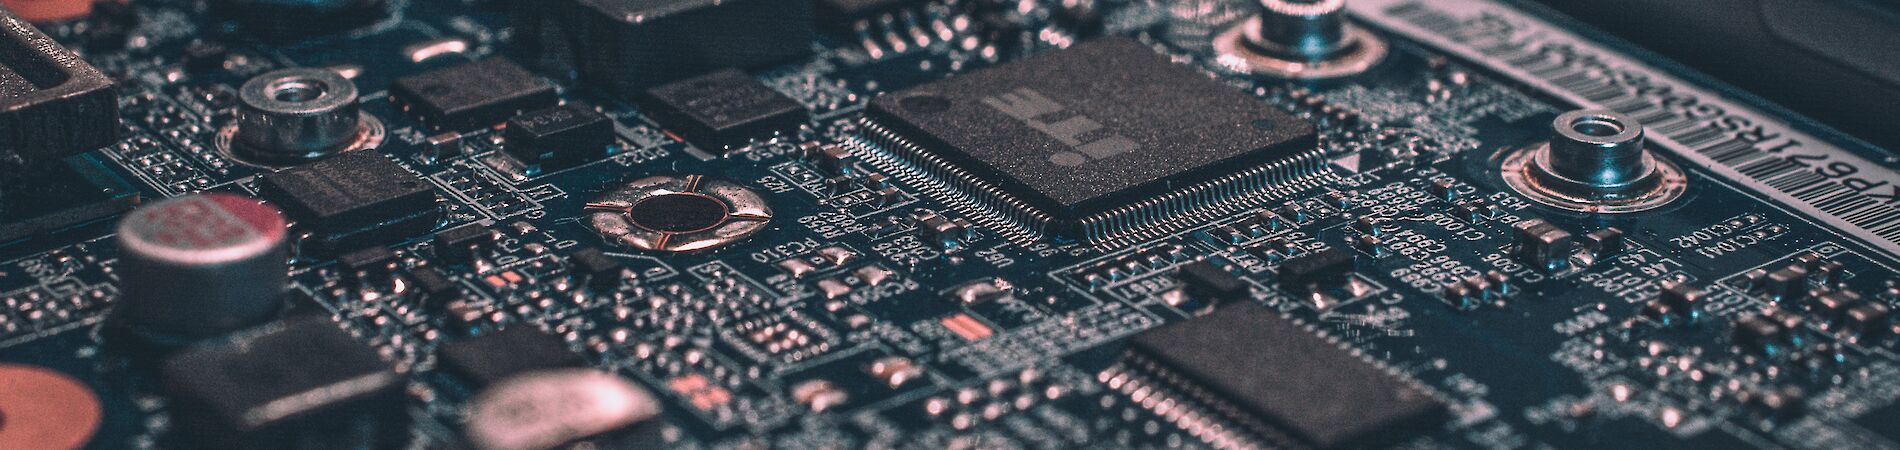 Macro photography of black circuit board